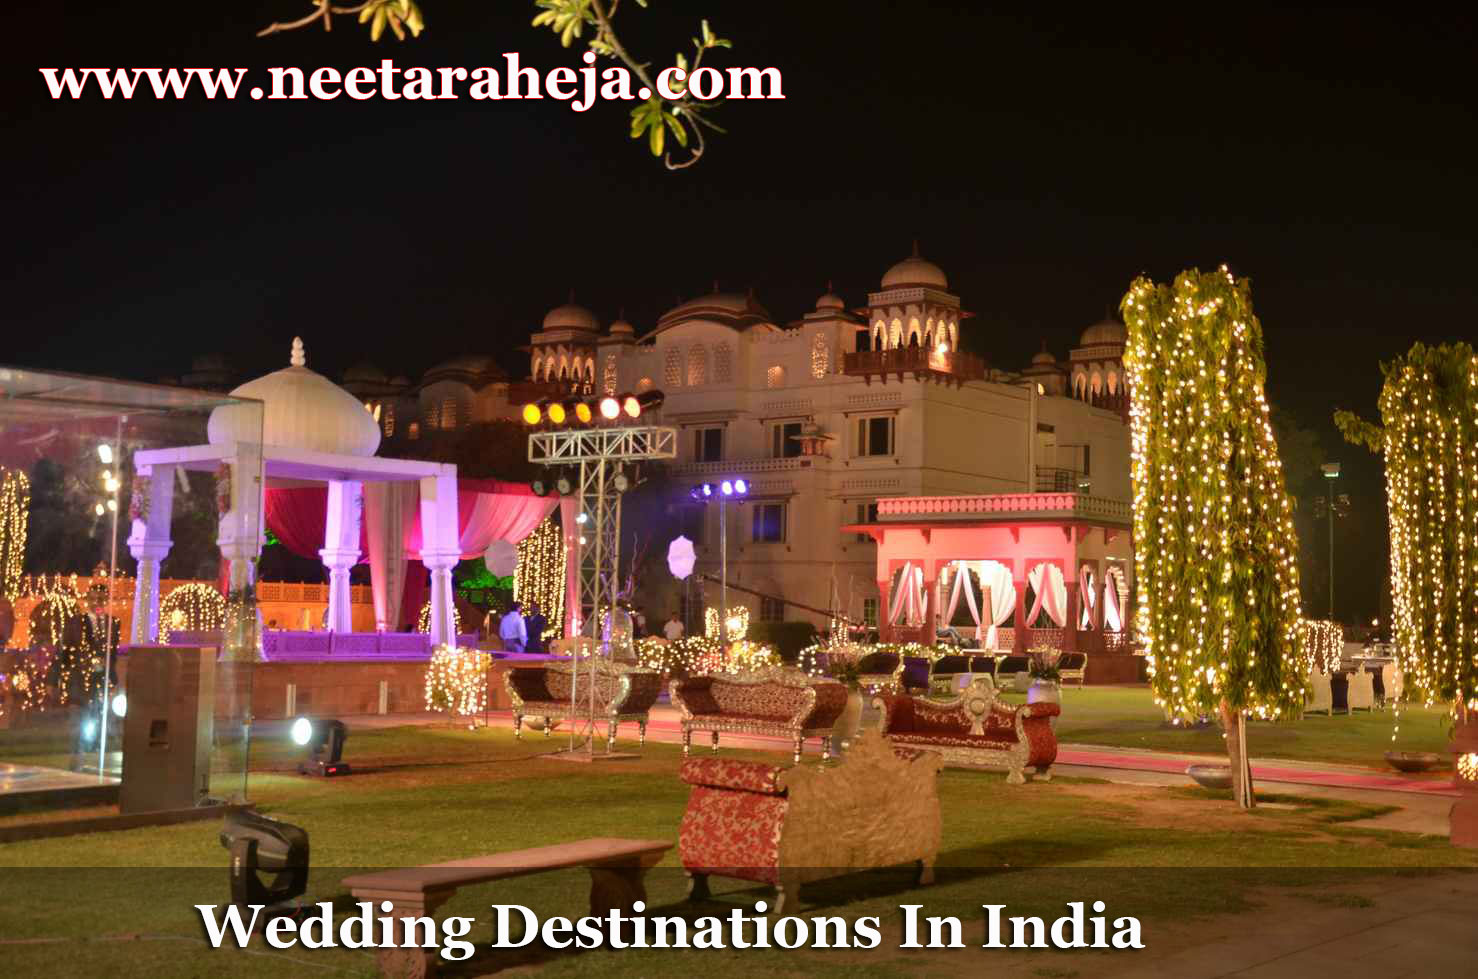 Complete wedding destination planning hire neetaraheja wedding Planner